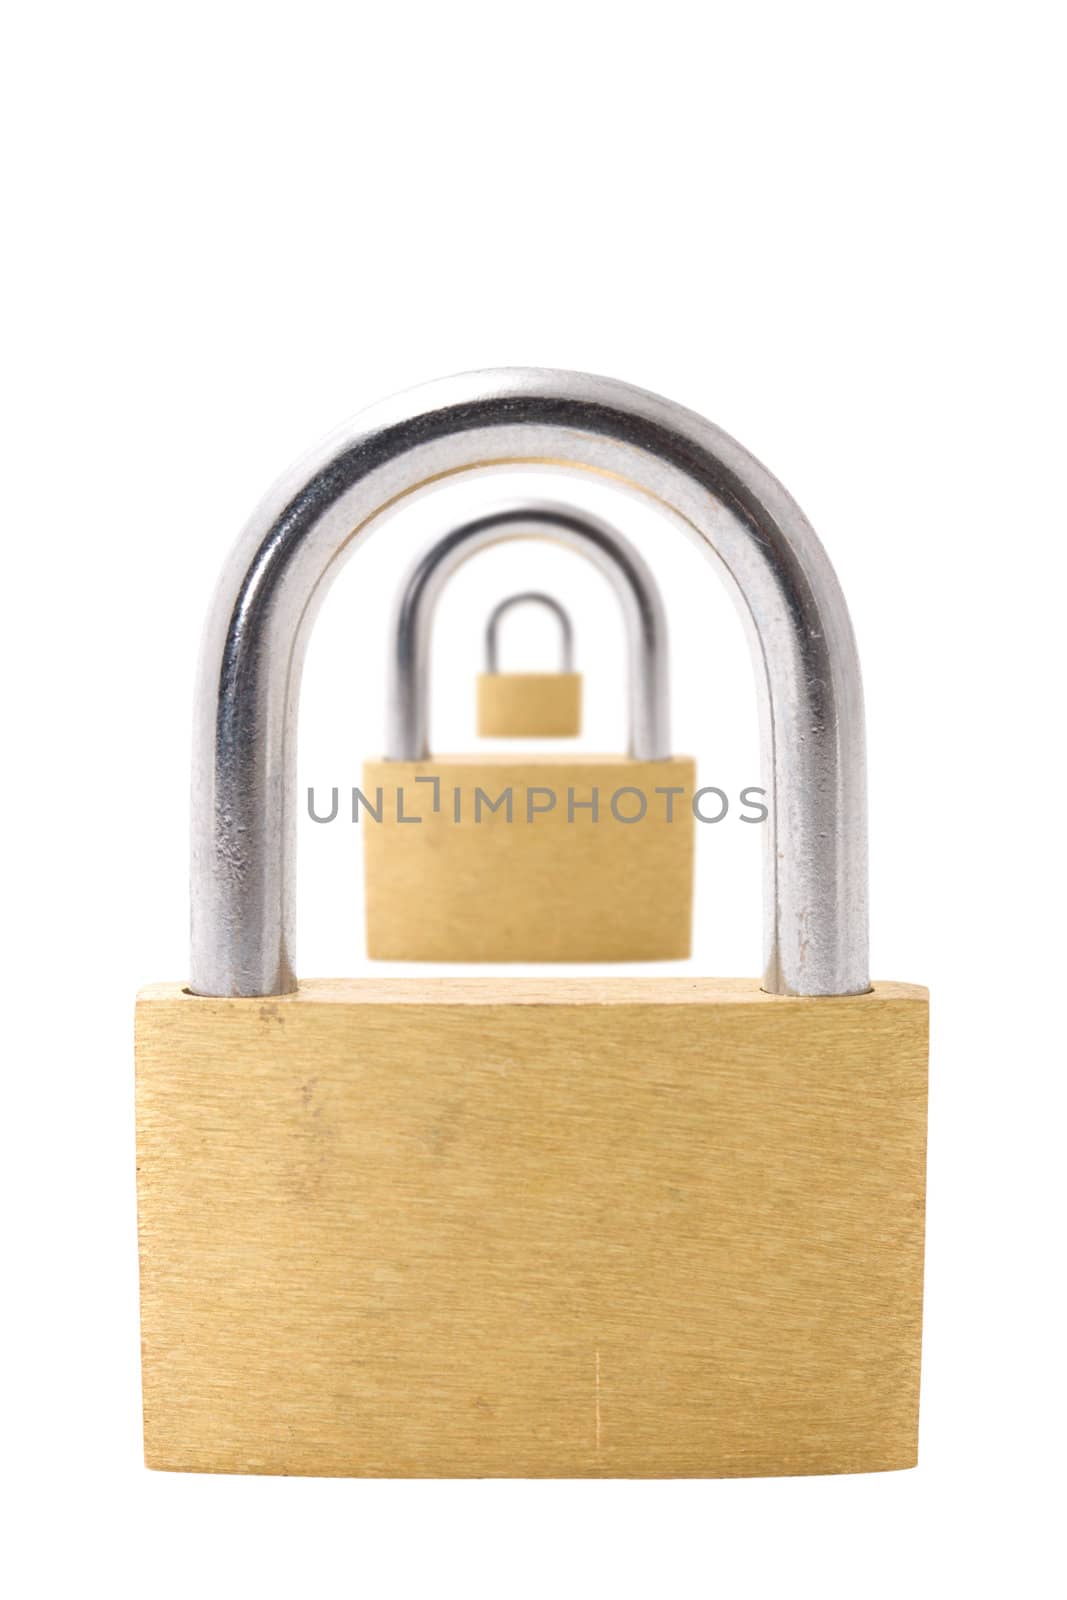 Three padlocks isolated on white background by dimol